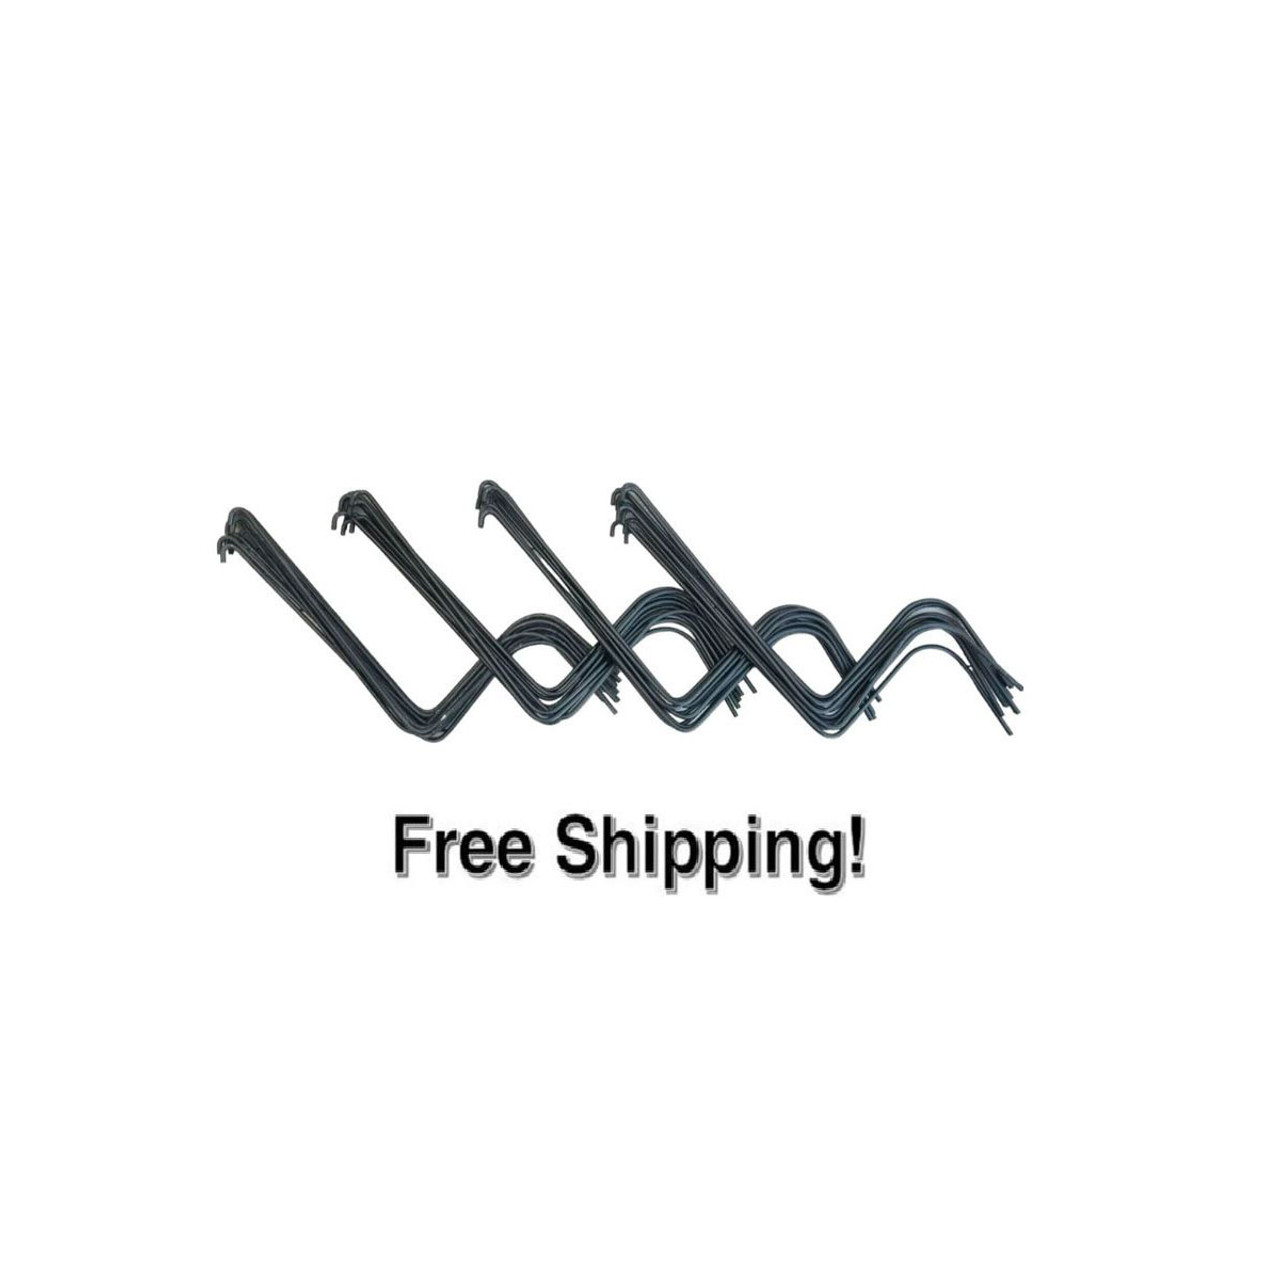 Sitrex 40-Pack of Premium Wheel Rake Teeth/Tines for 60" Wheel (Free Shipping)